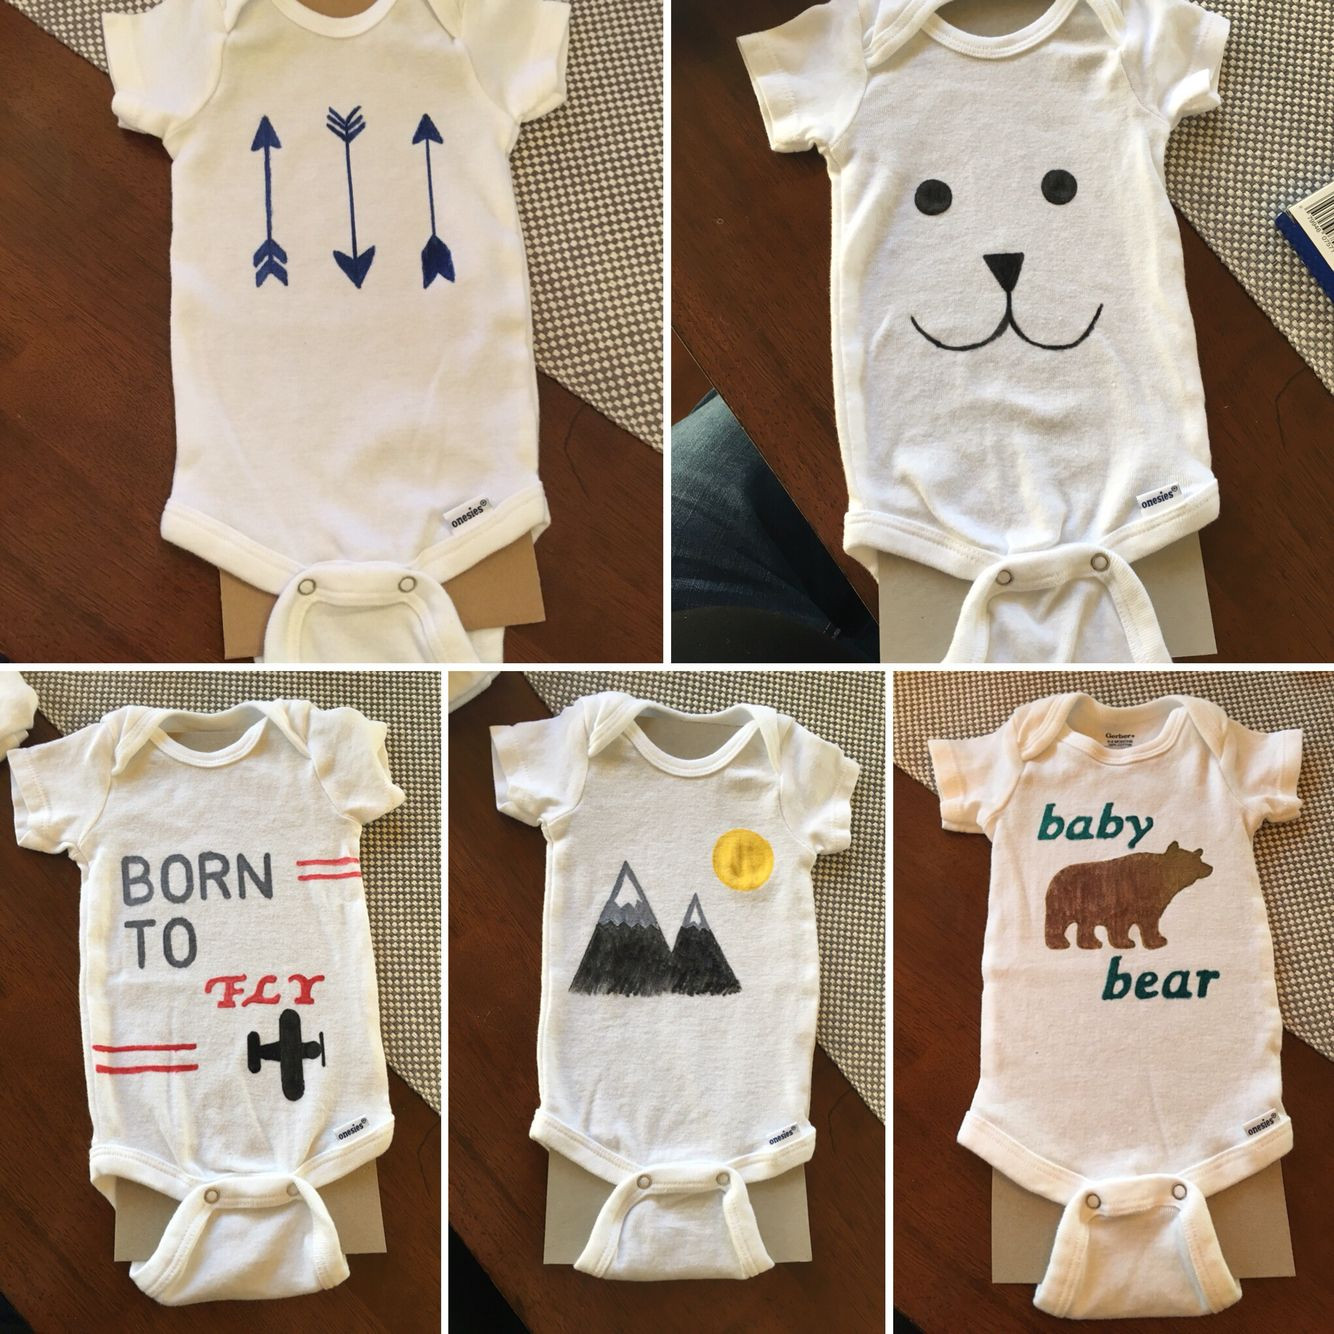 Baby Onesie Ideas For Decorating
 DIY Fabric marker onesies